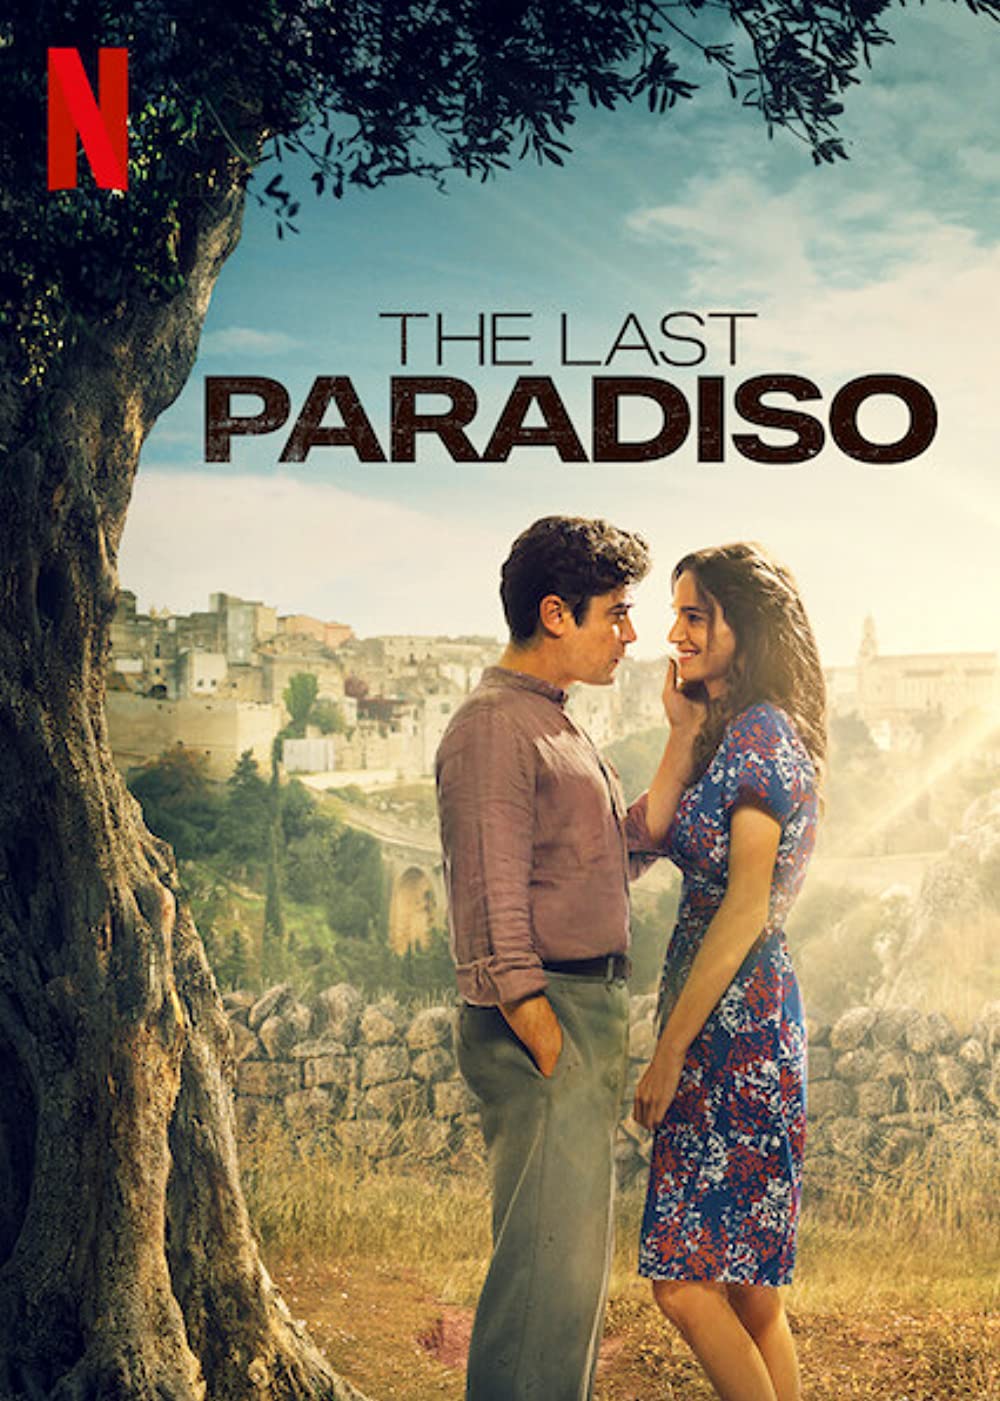 The Last Paradiso 2021 Subtitles [English SRT]